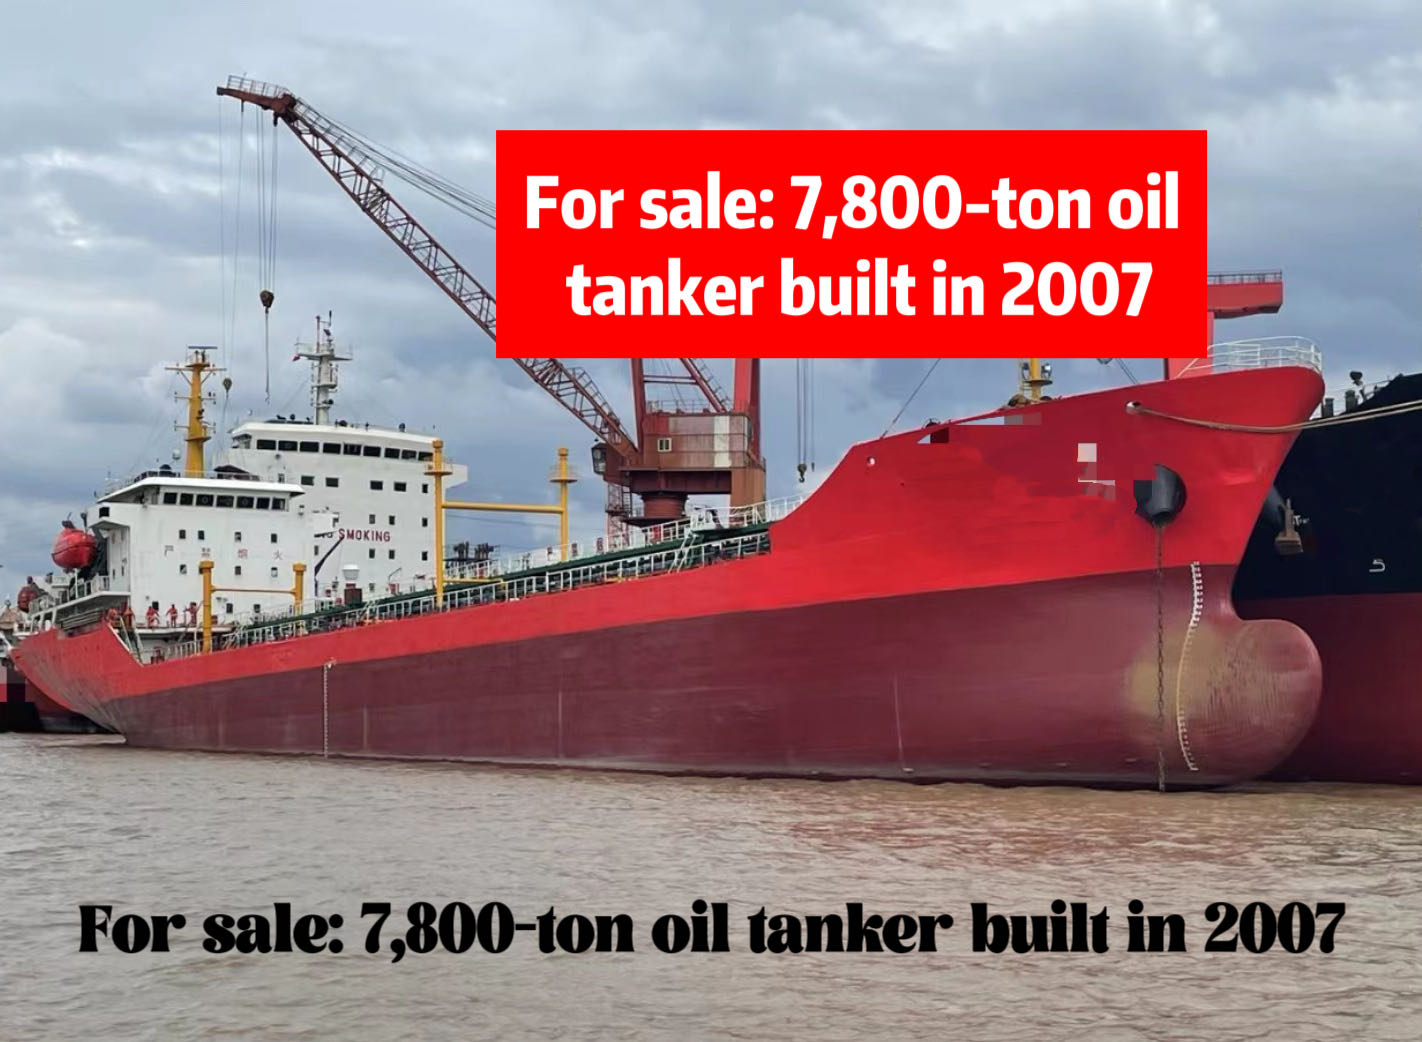 For sale: 7,800-ton oil tanker built in 2007